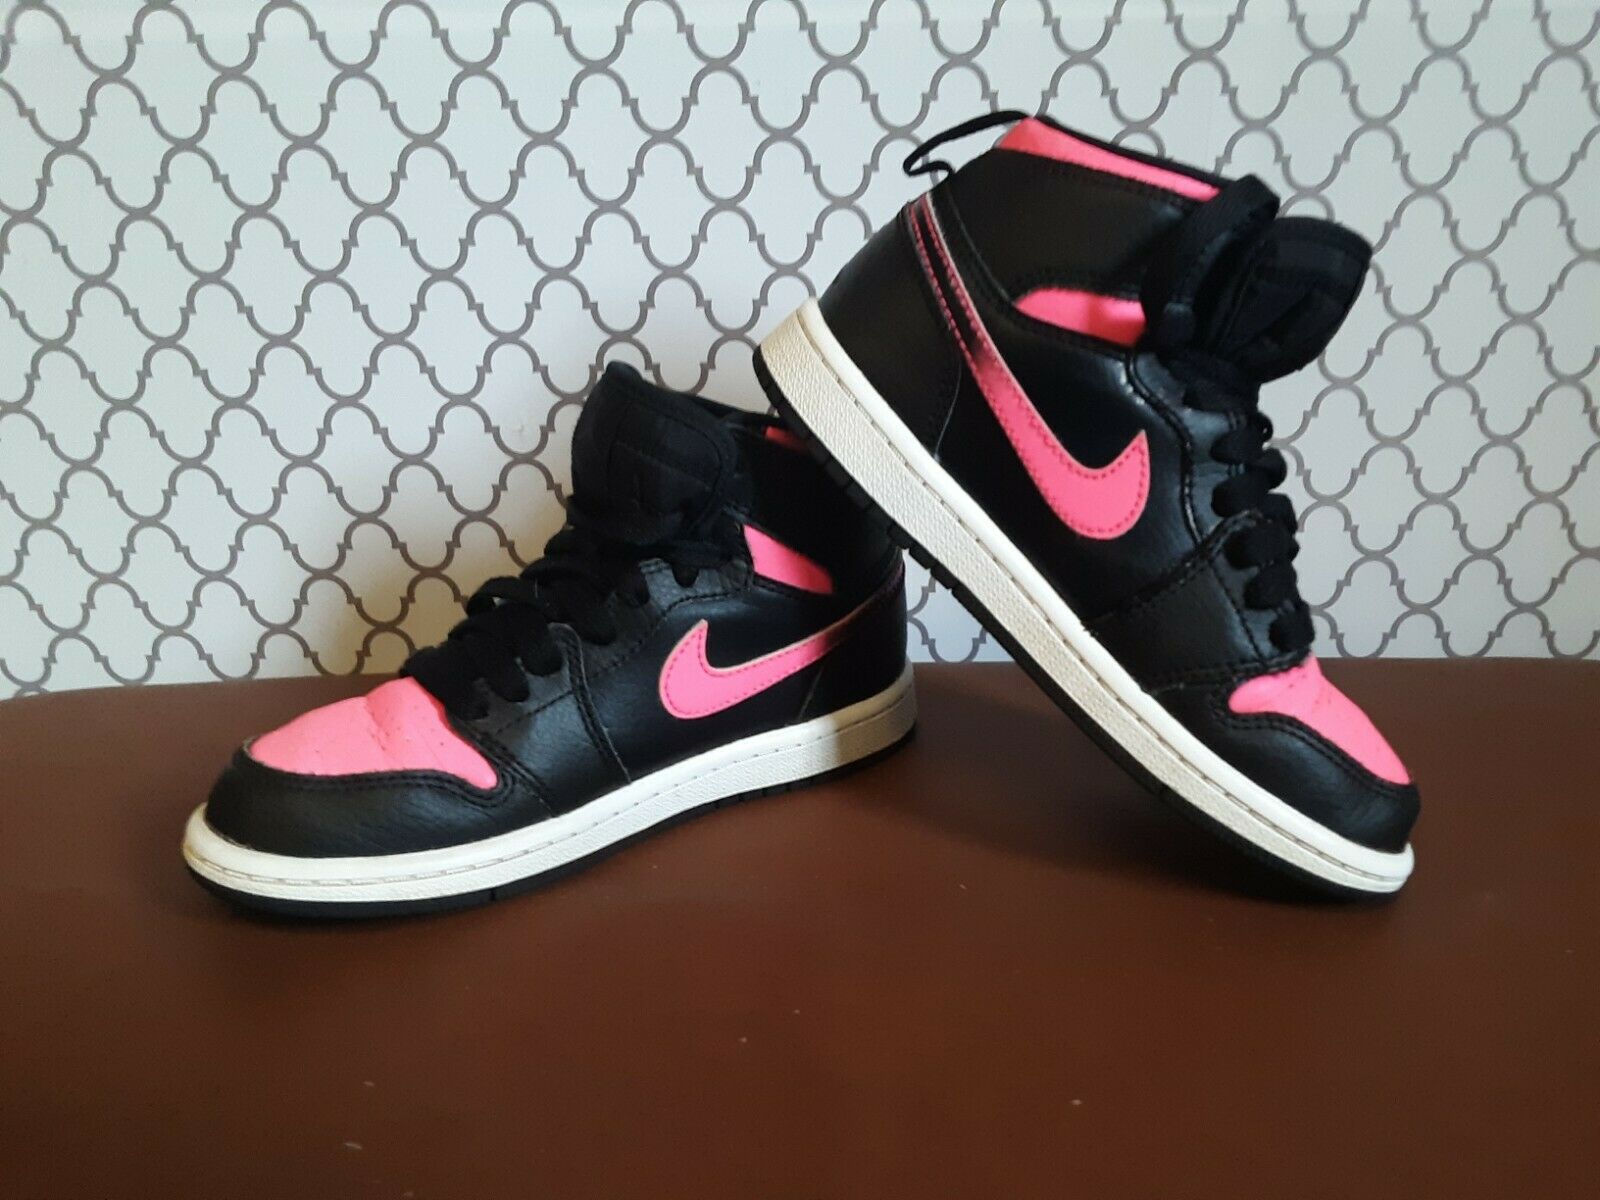 Nike AF 1 Pink/Black Shoes - Size 13Y Girl's High tops - Fading Swoosh